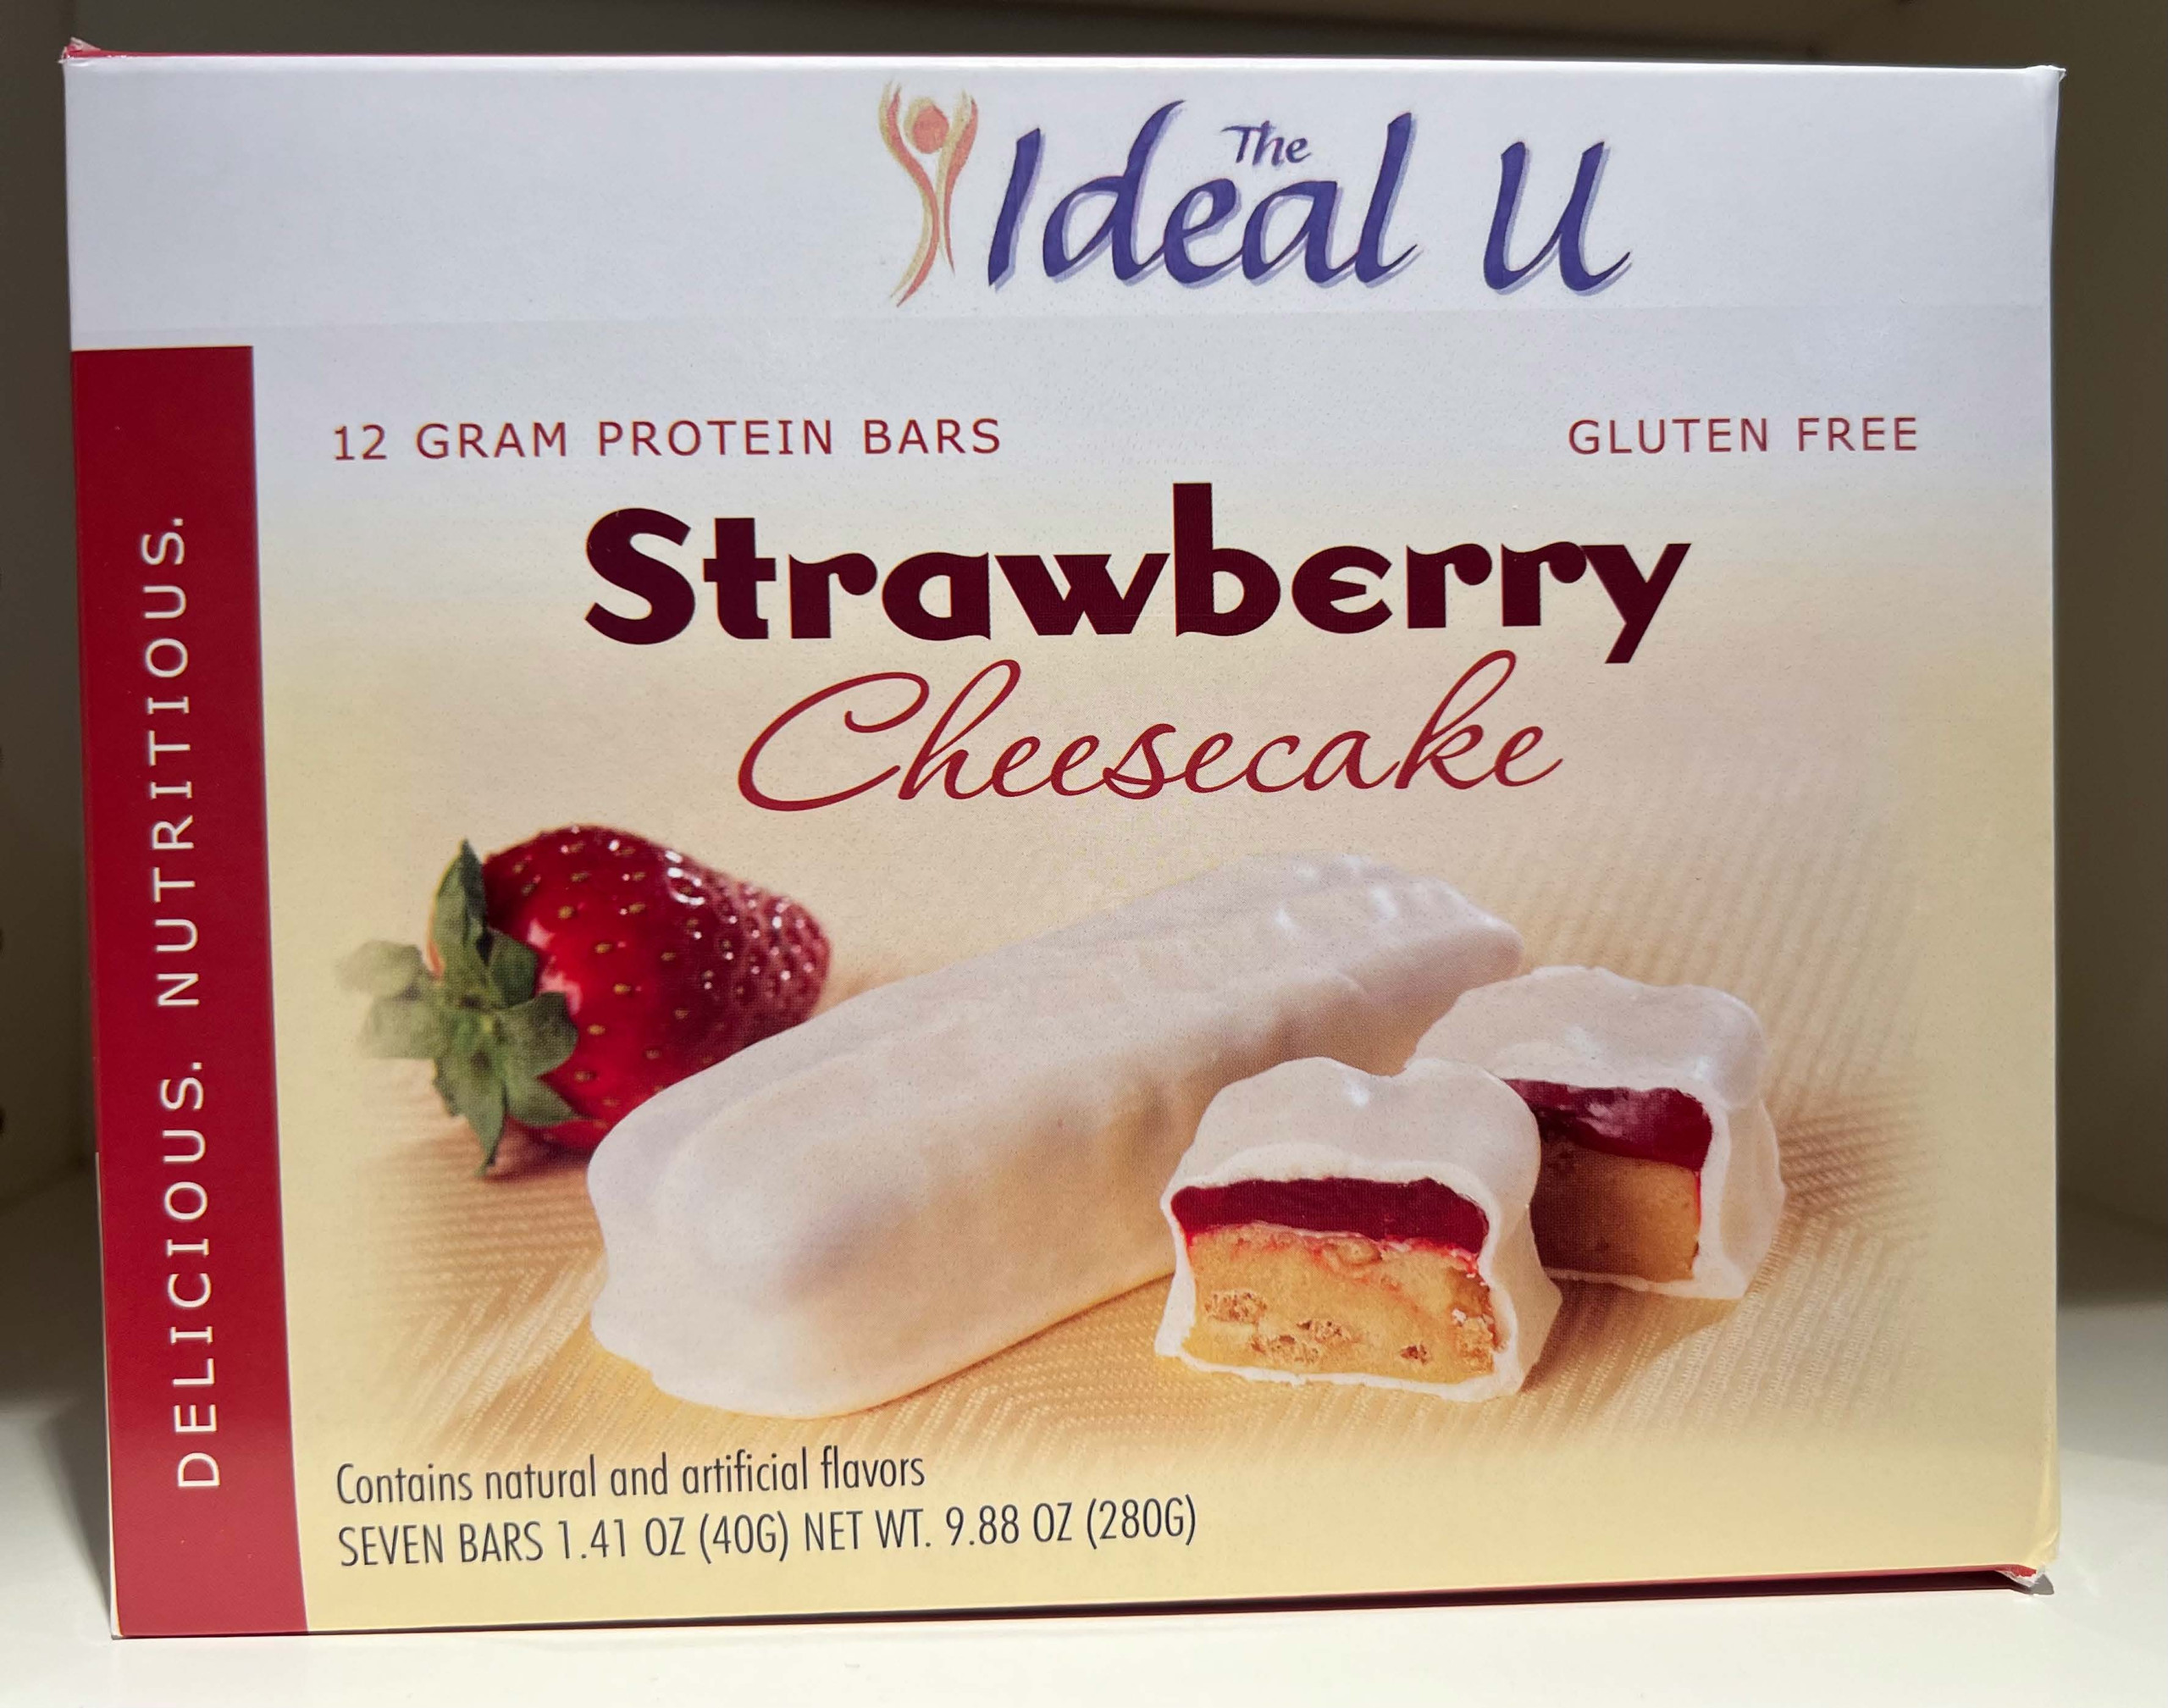 Strawberry Cheesecake protein bar